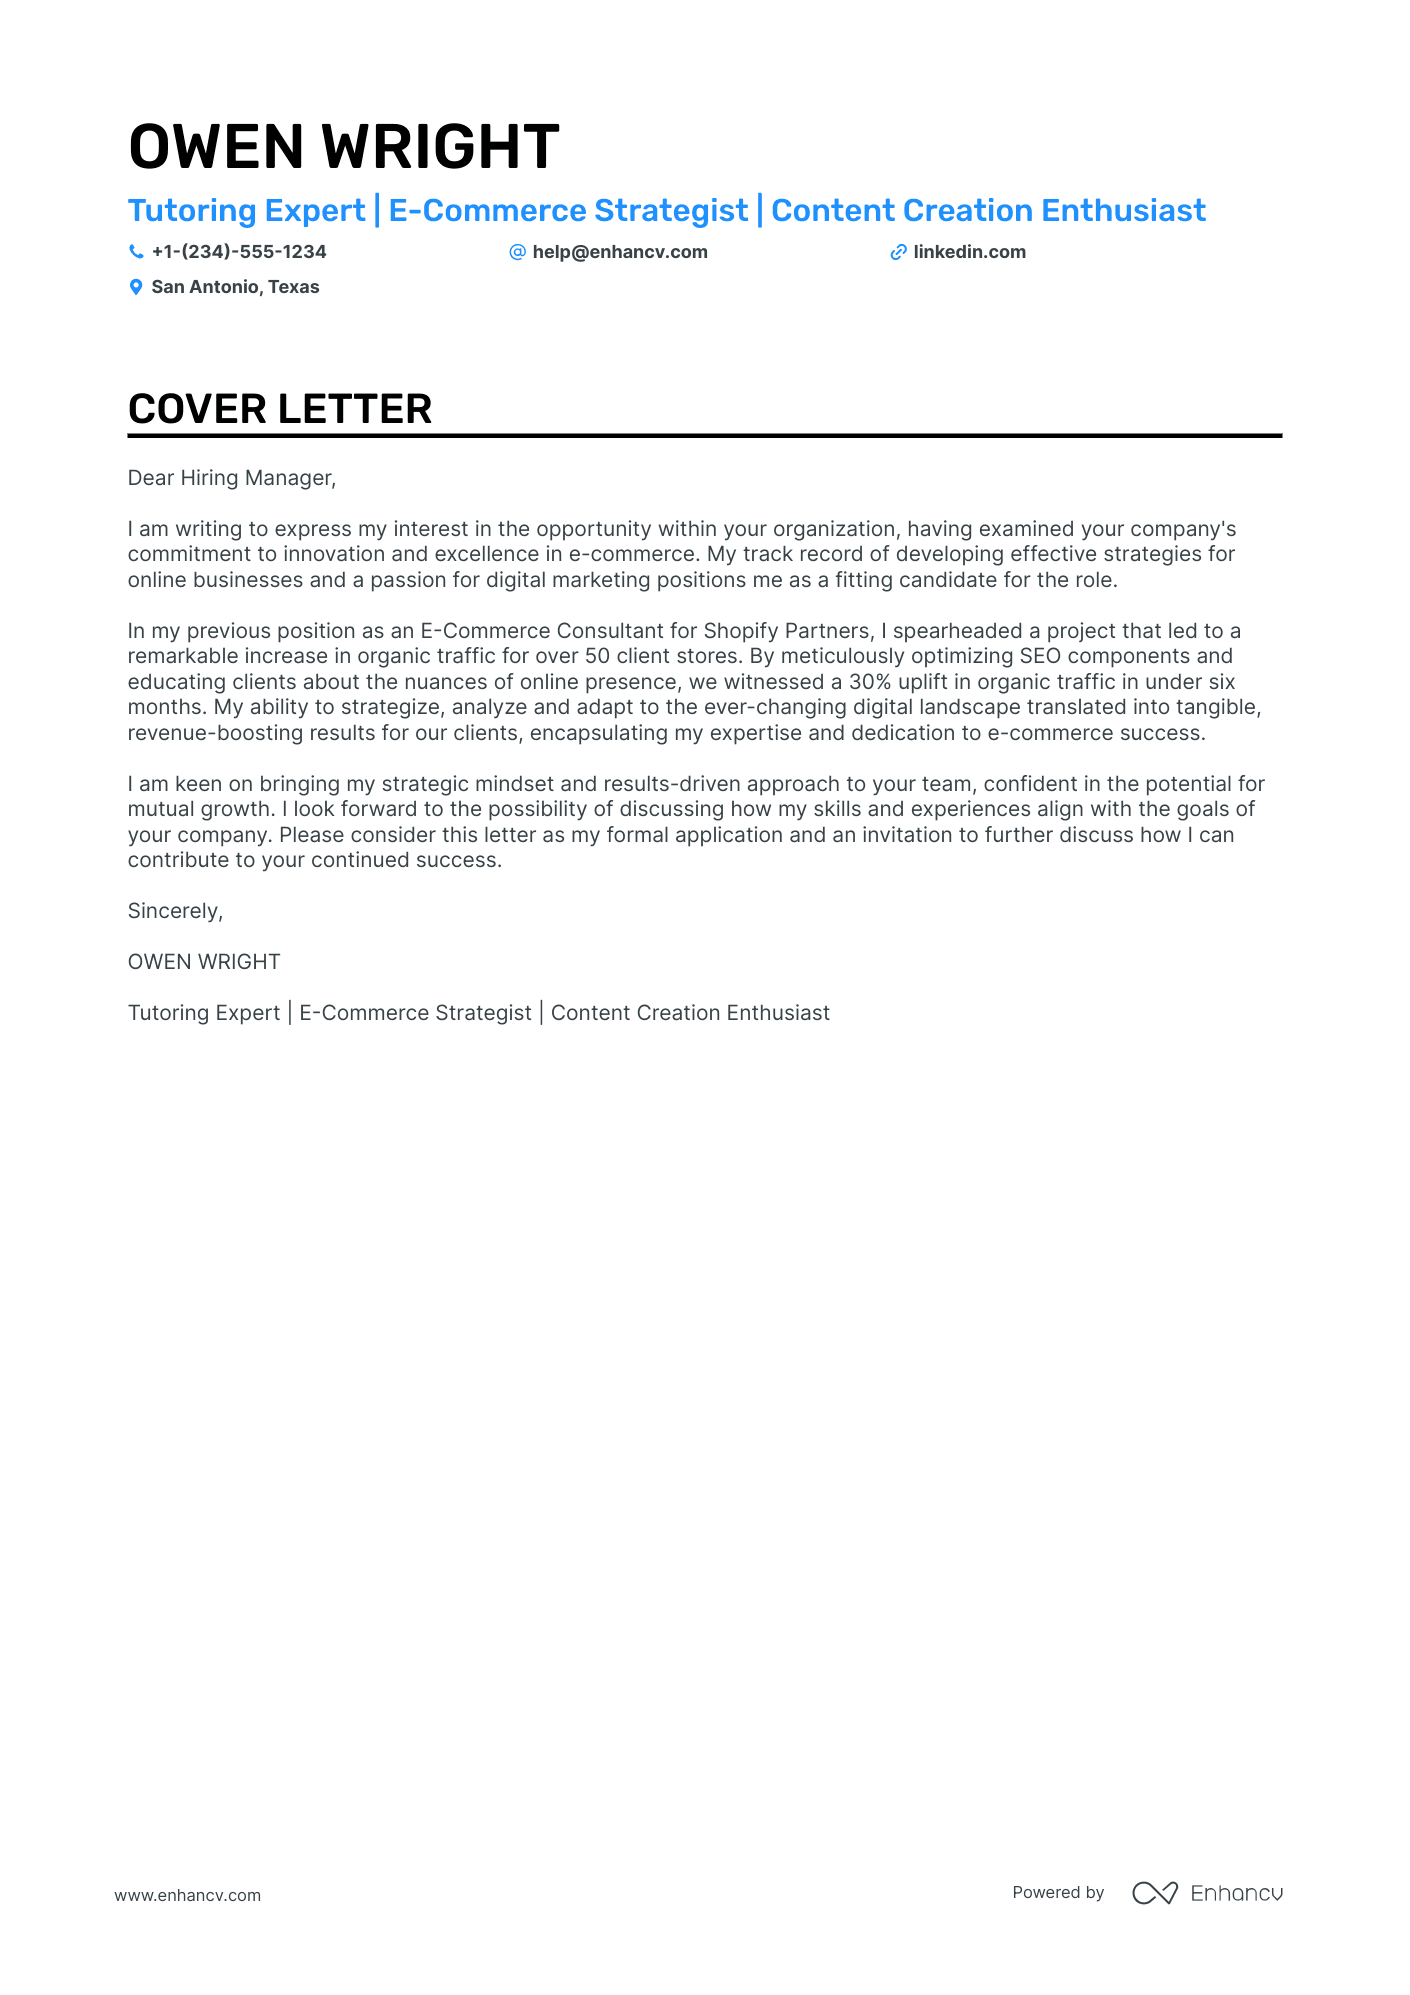 sample cover letter for tutor role